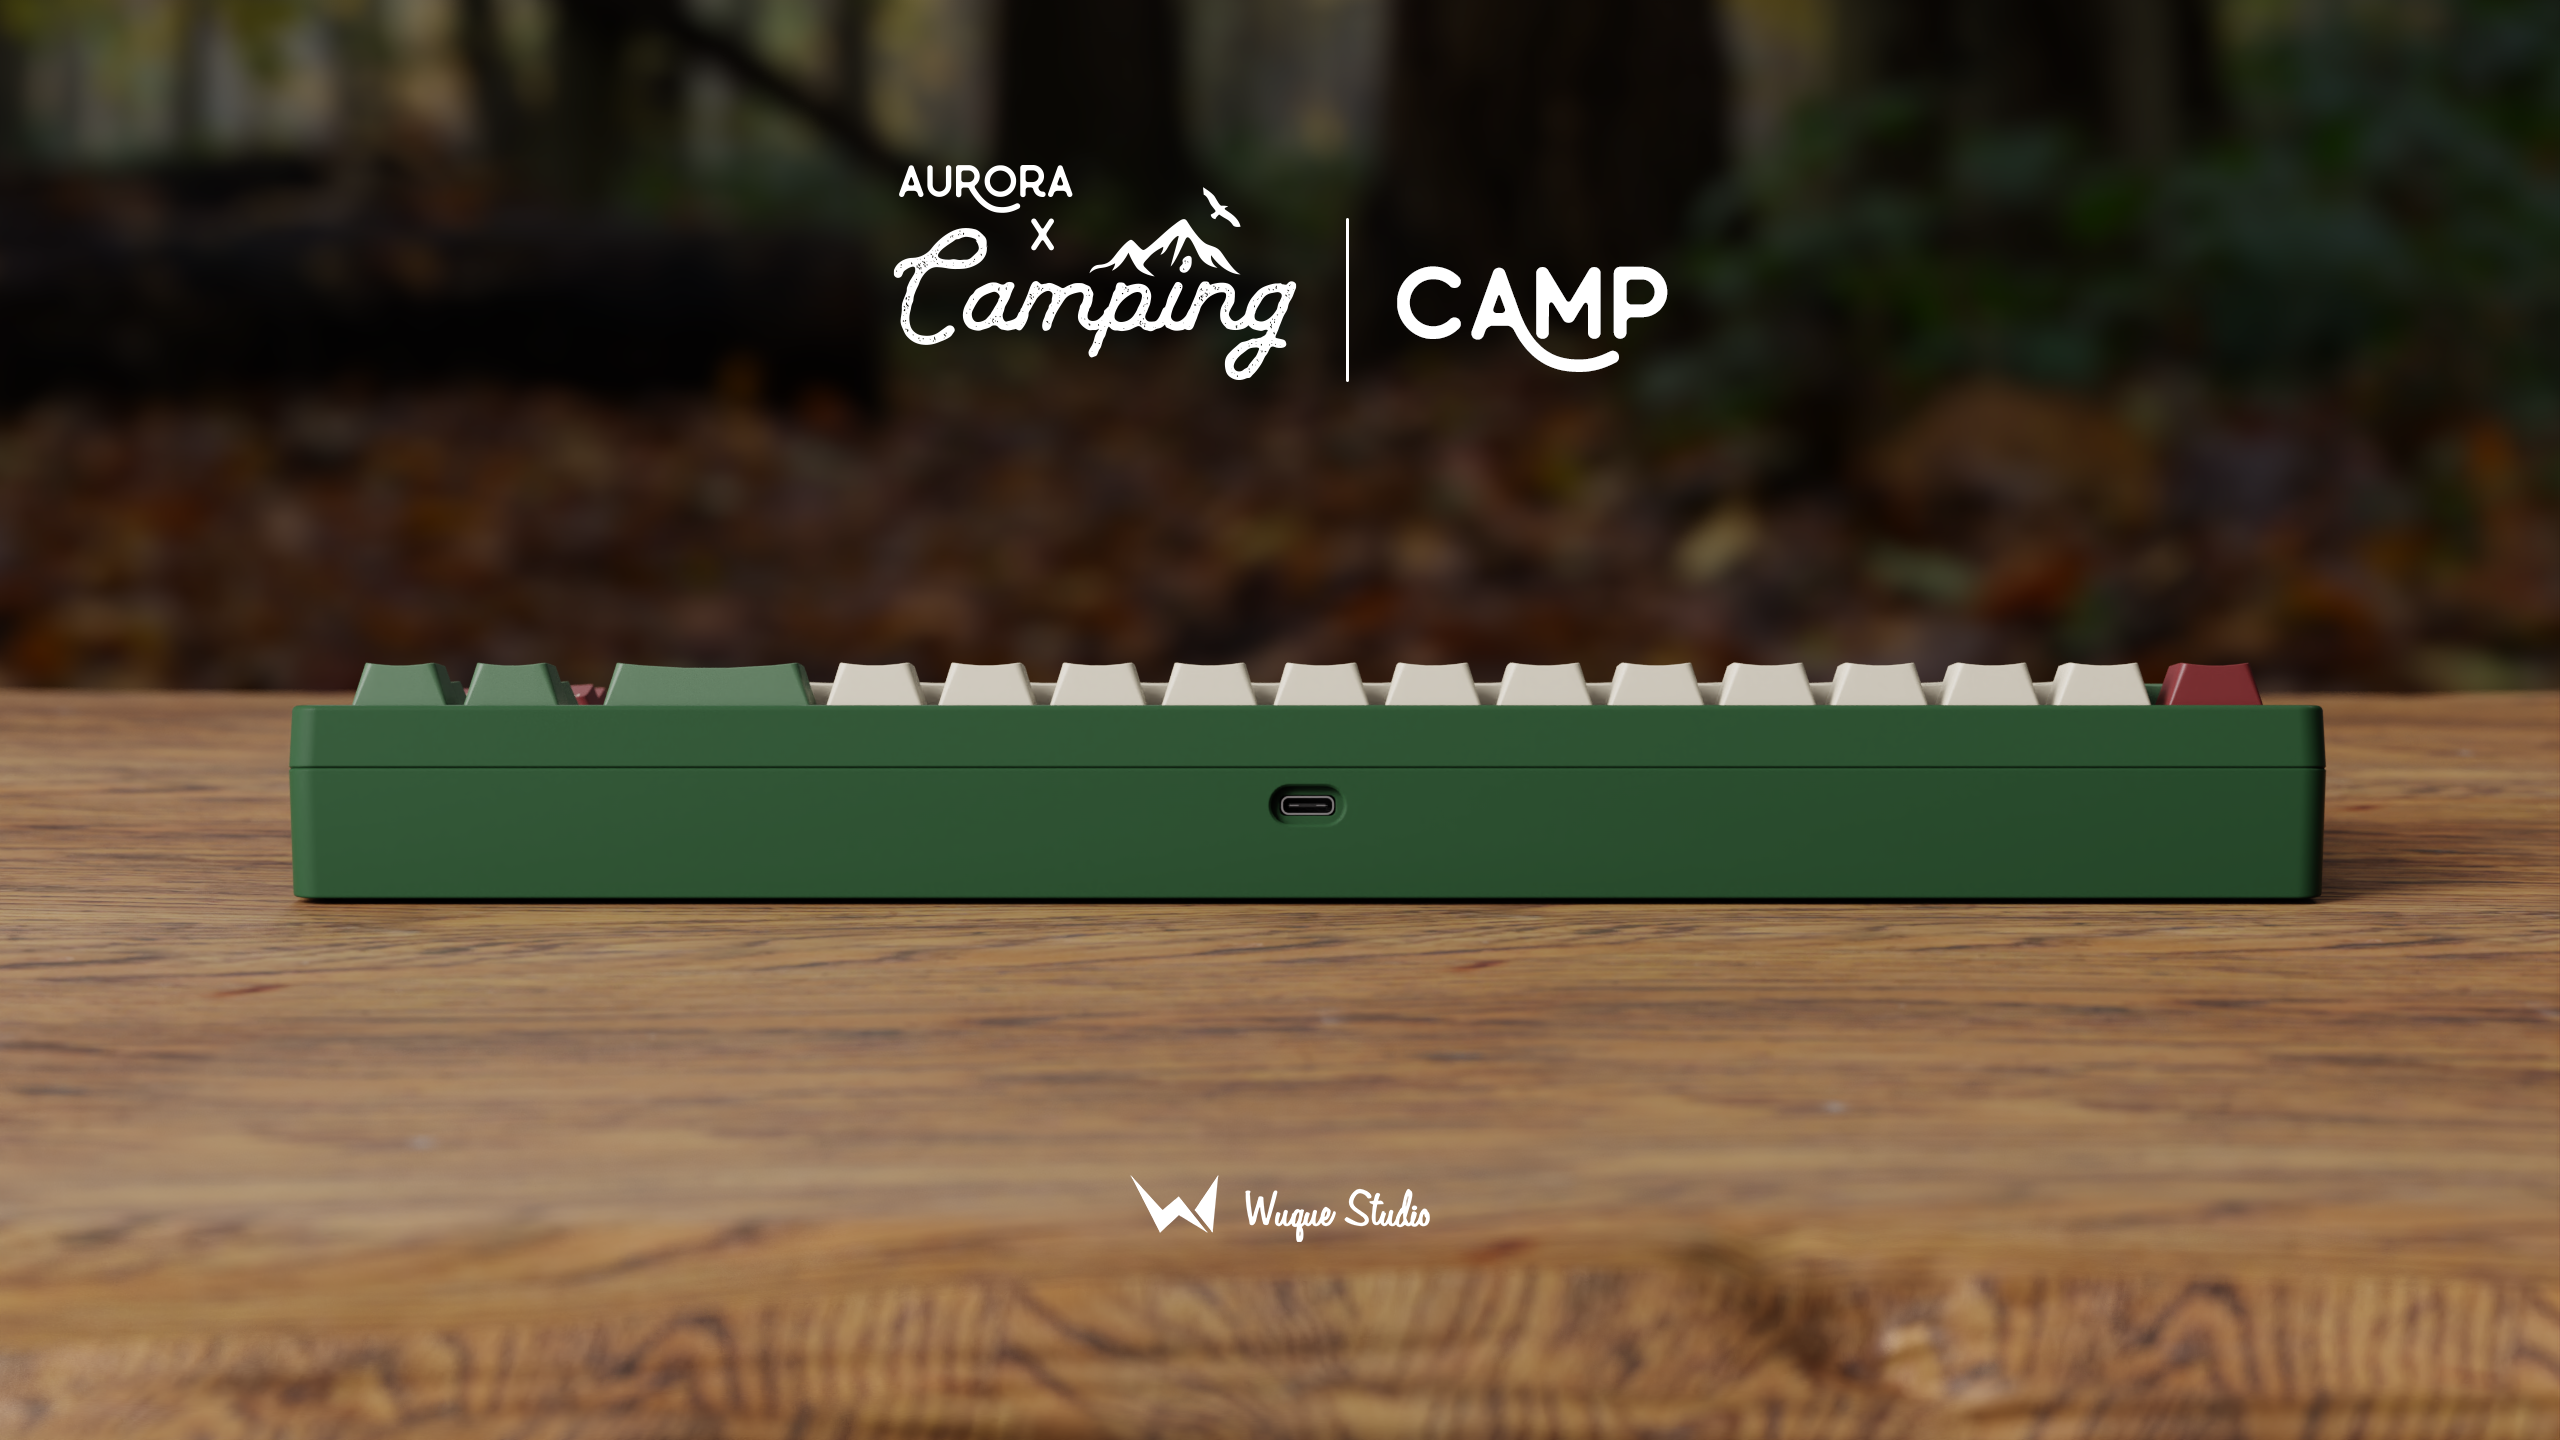 [GB] Aurora x Camping